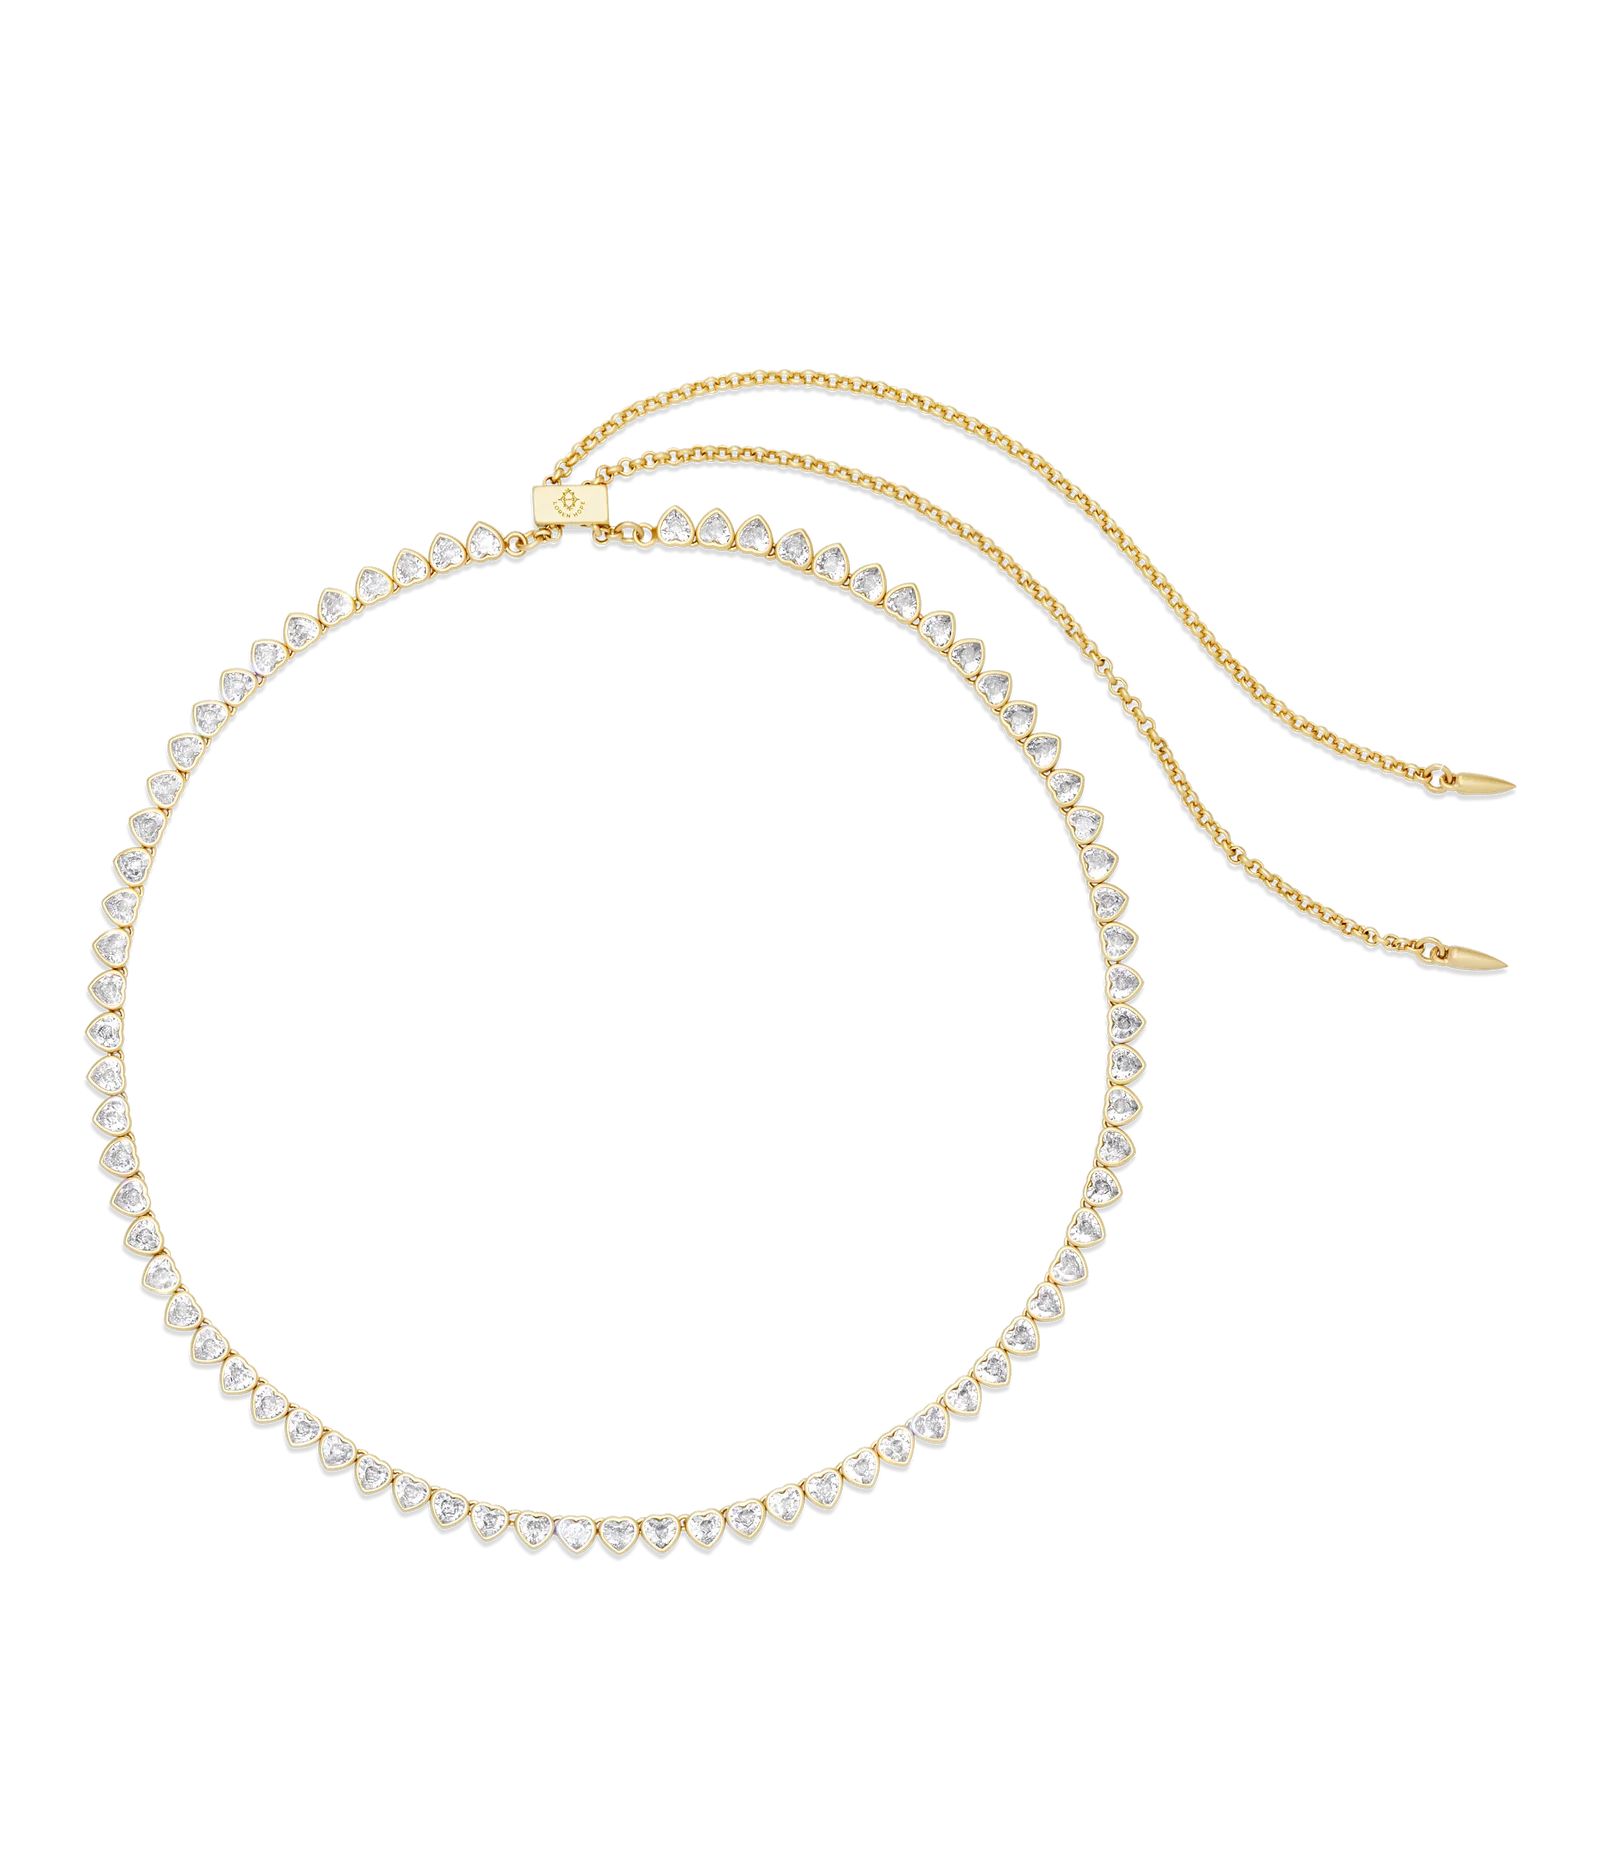 Lexi Slider Tennis Necklace | Loren Hope Designs